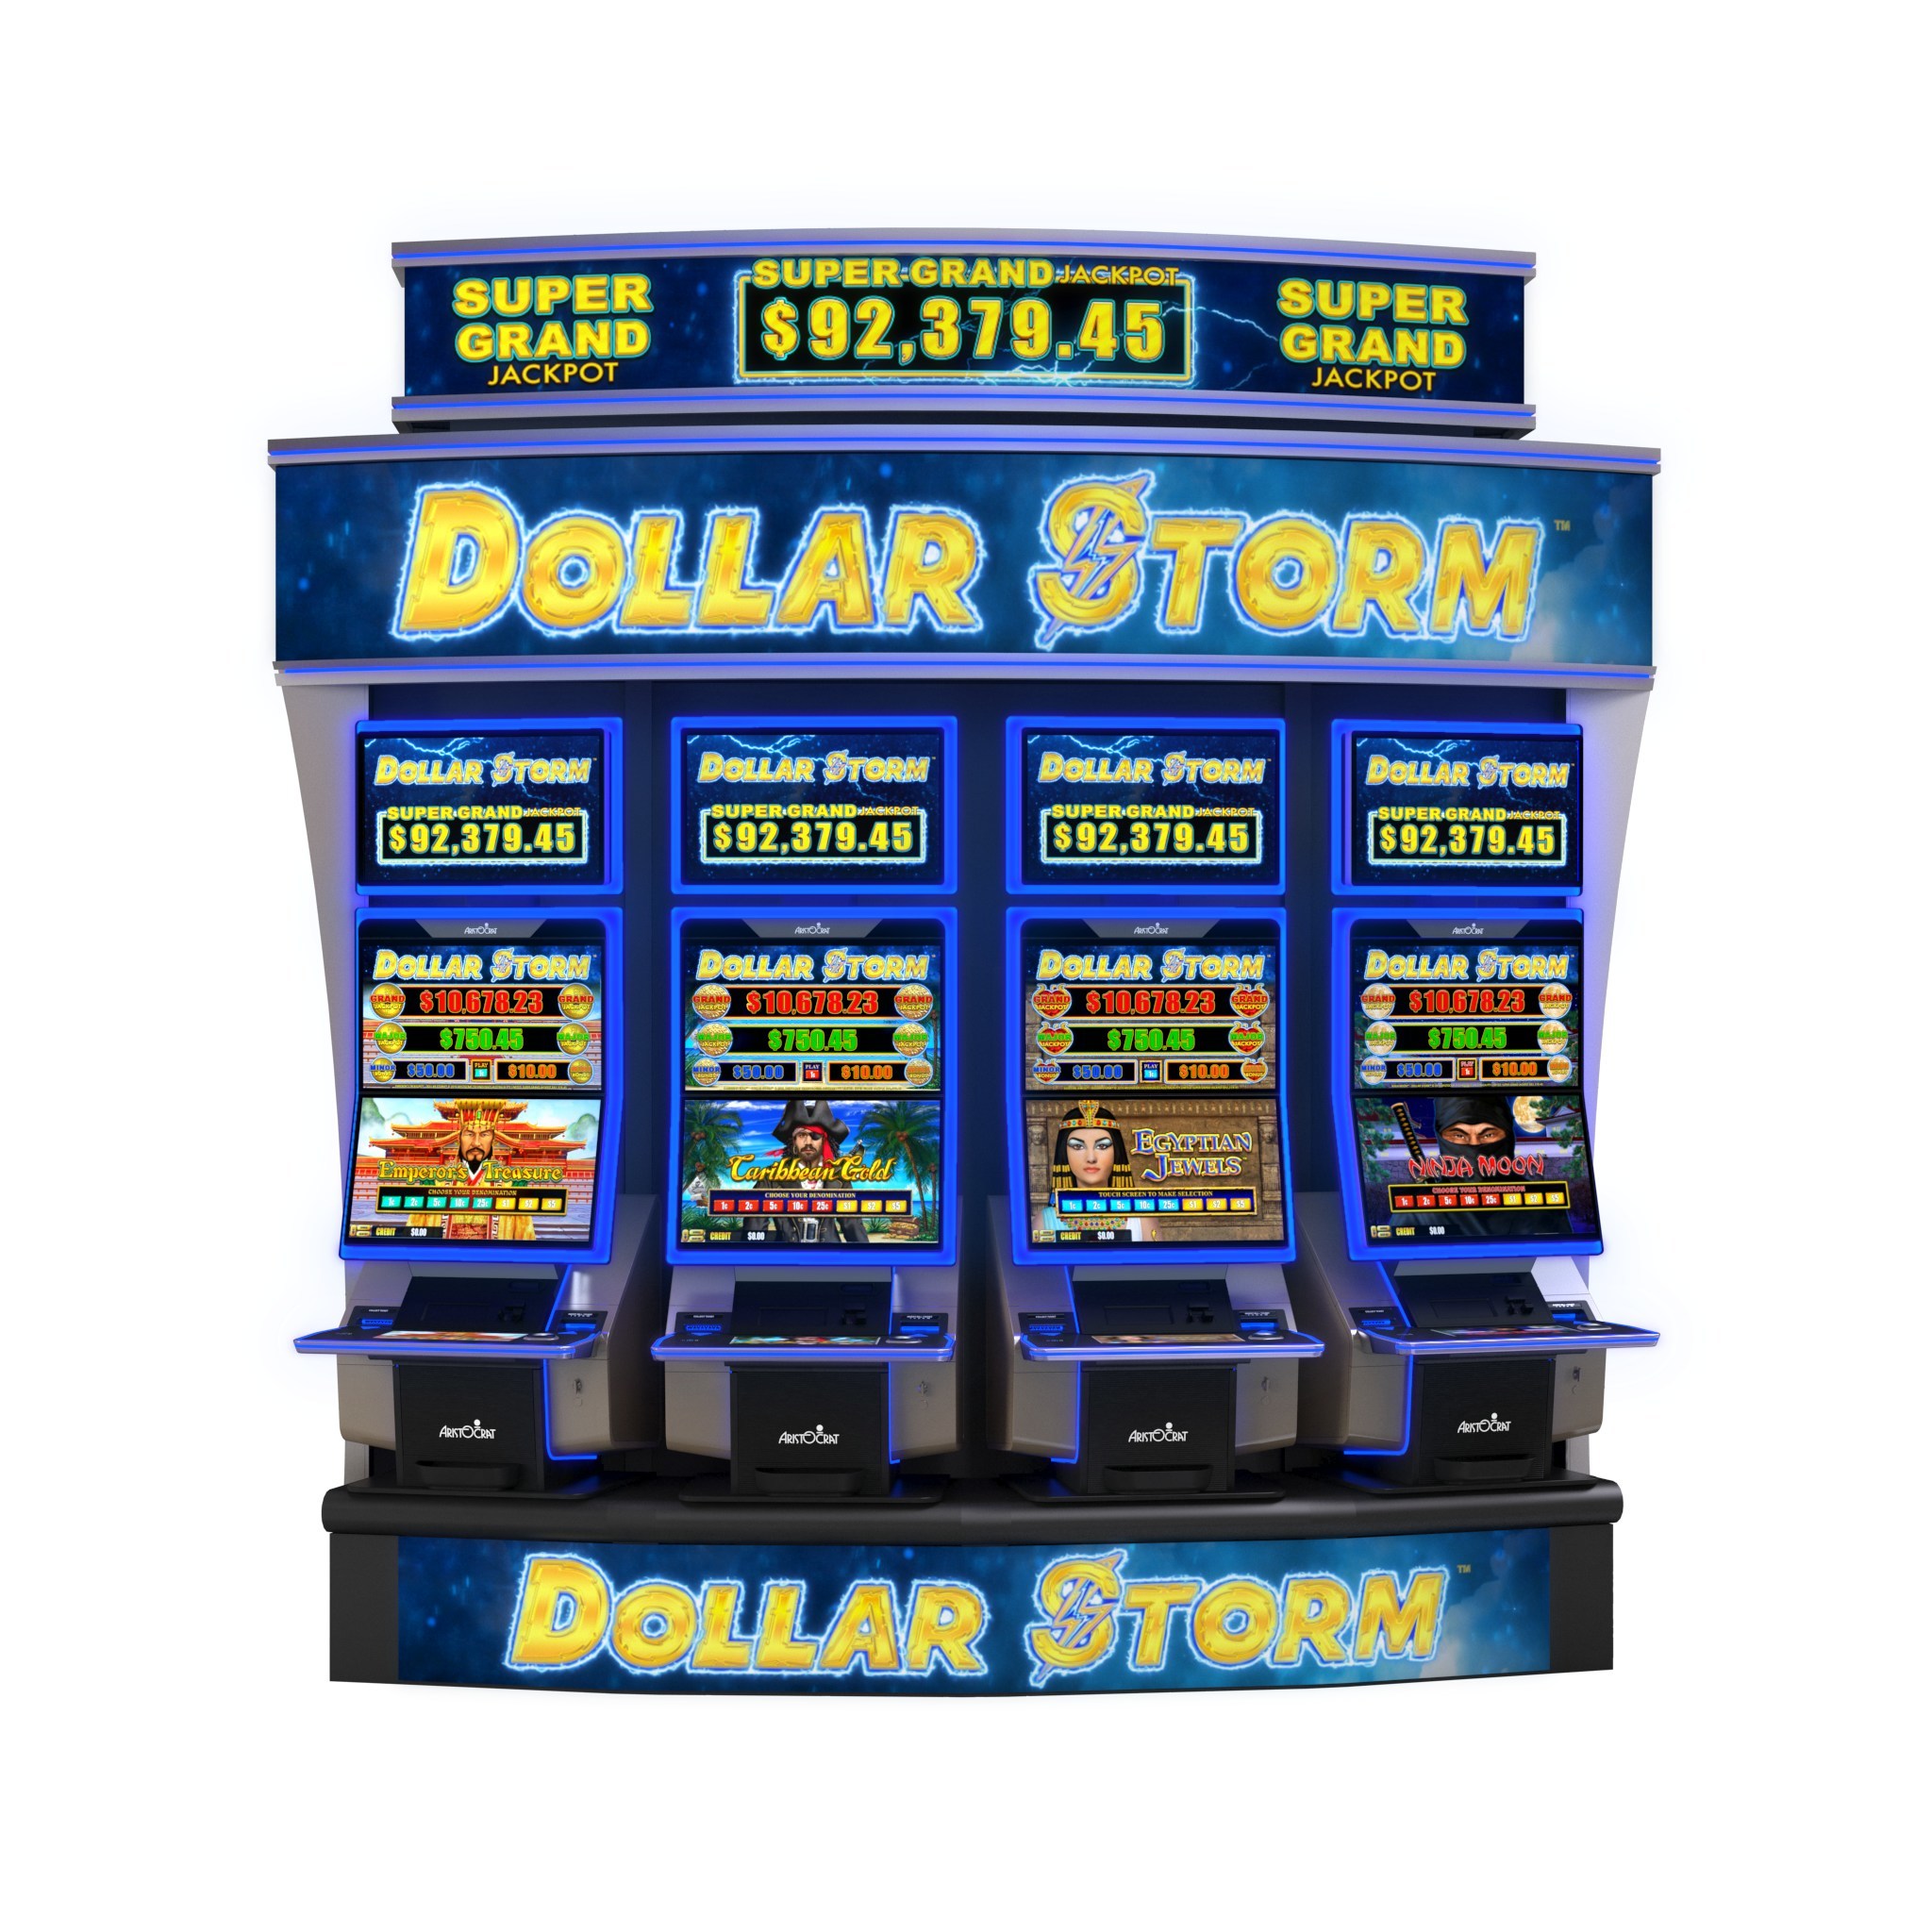 Grand slots free slot machines